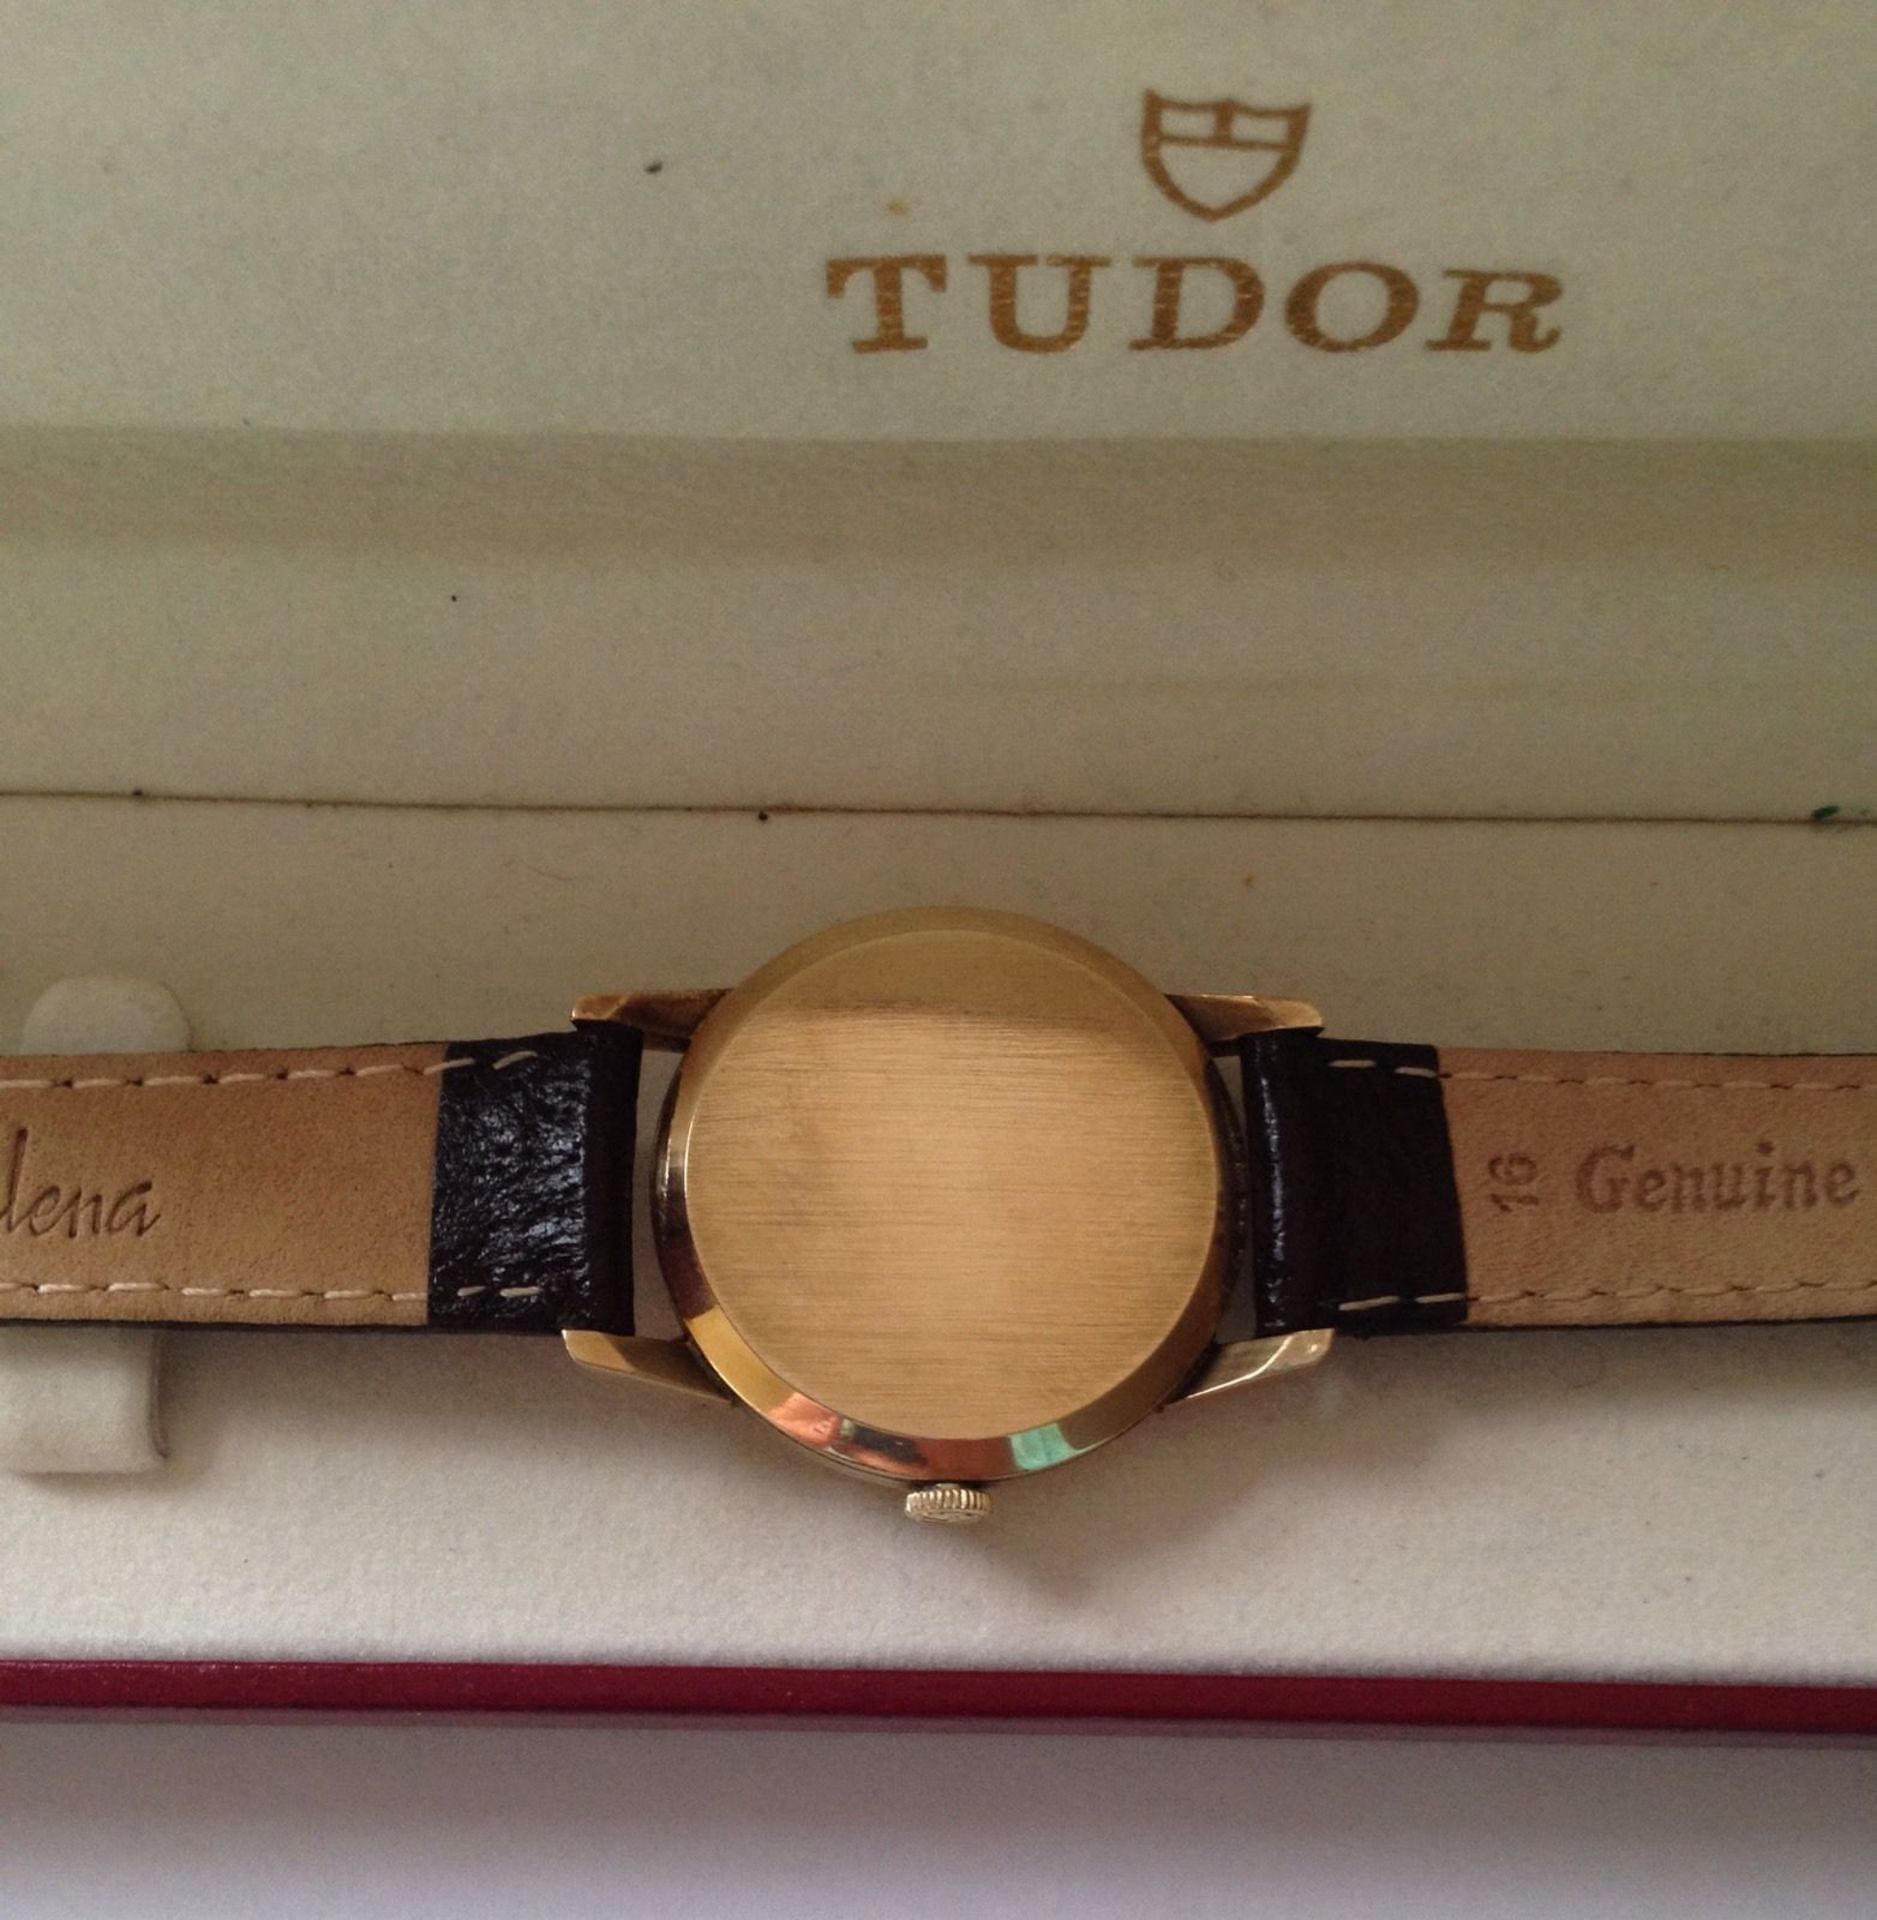 Vintage Gold Tudor Watch In Original Box - Image 2 of 5